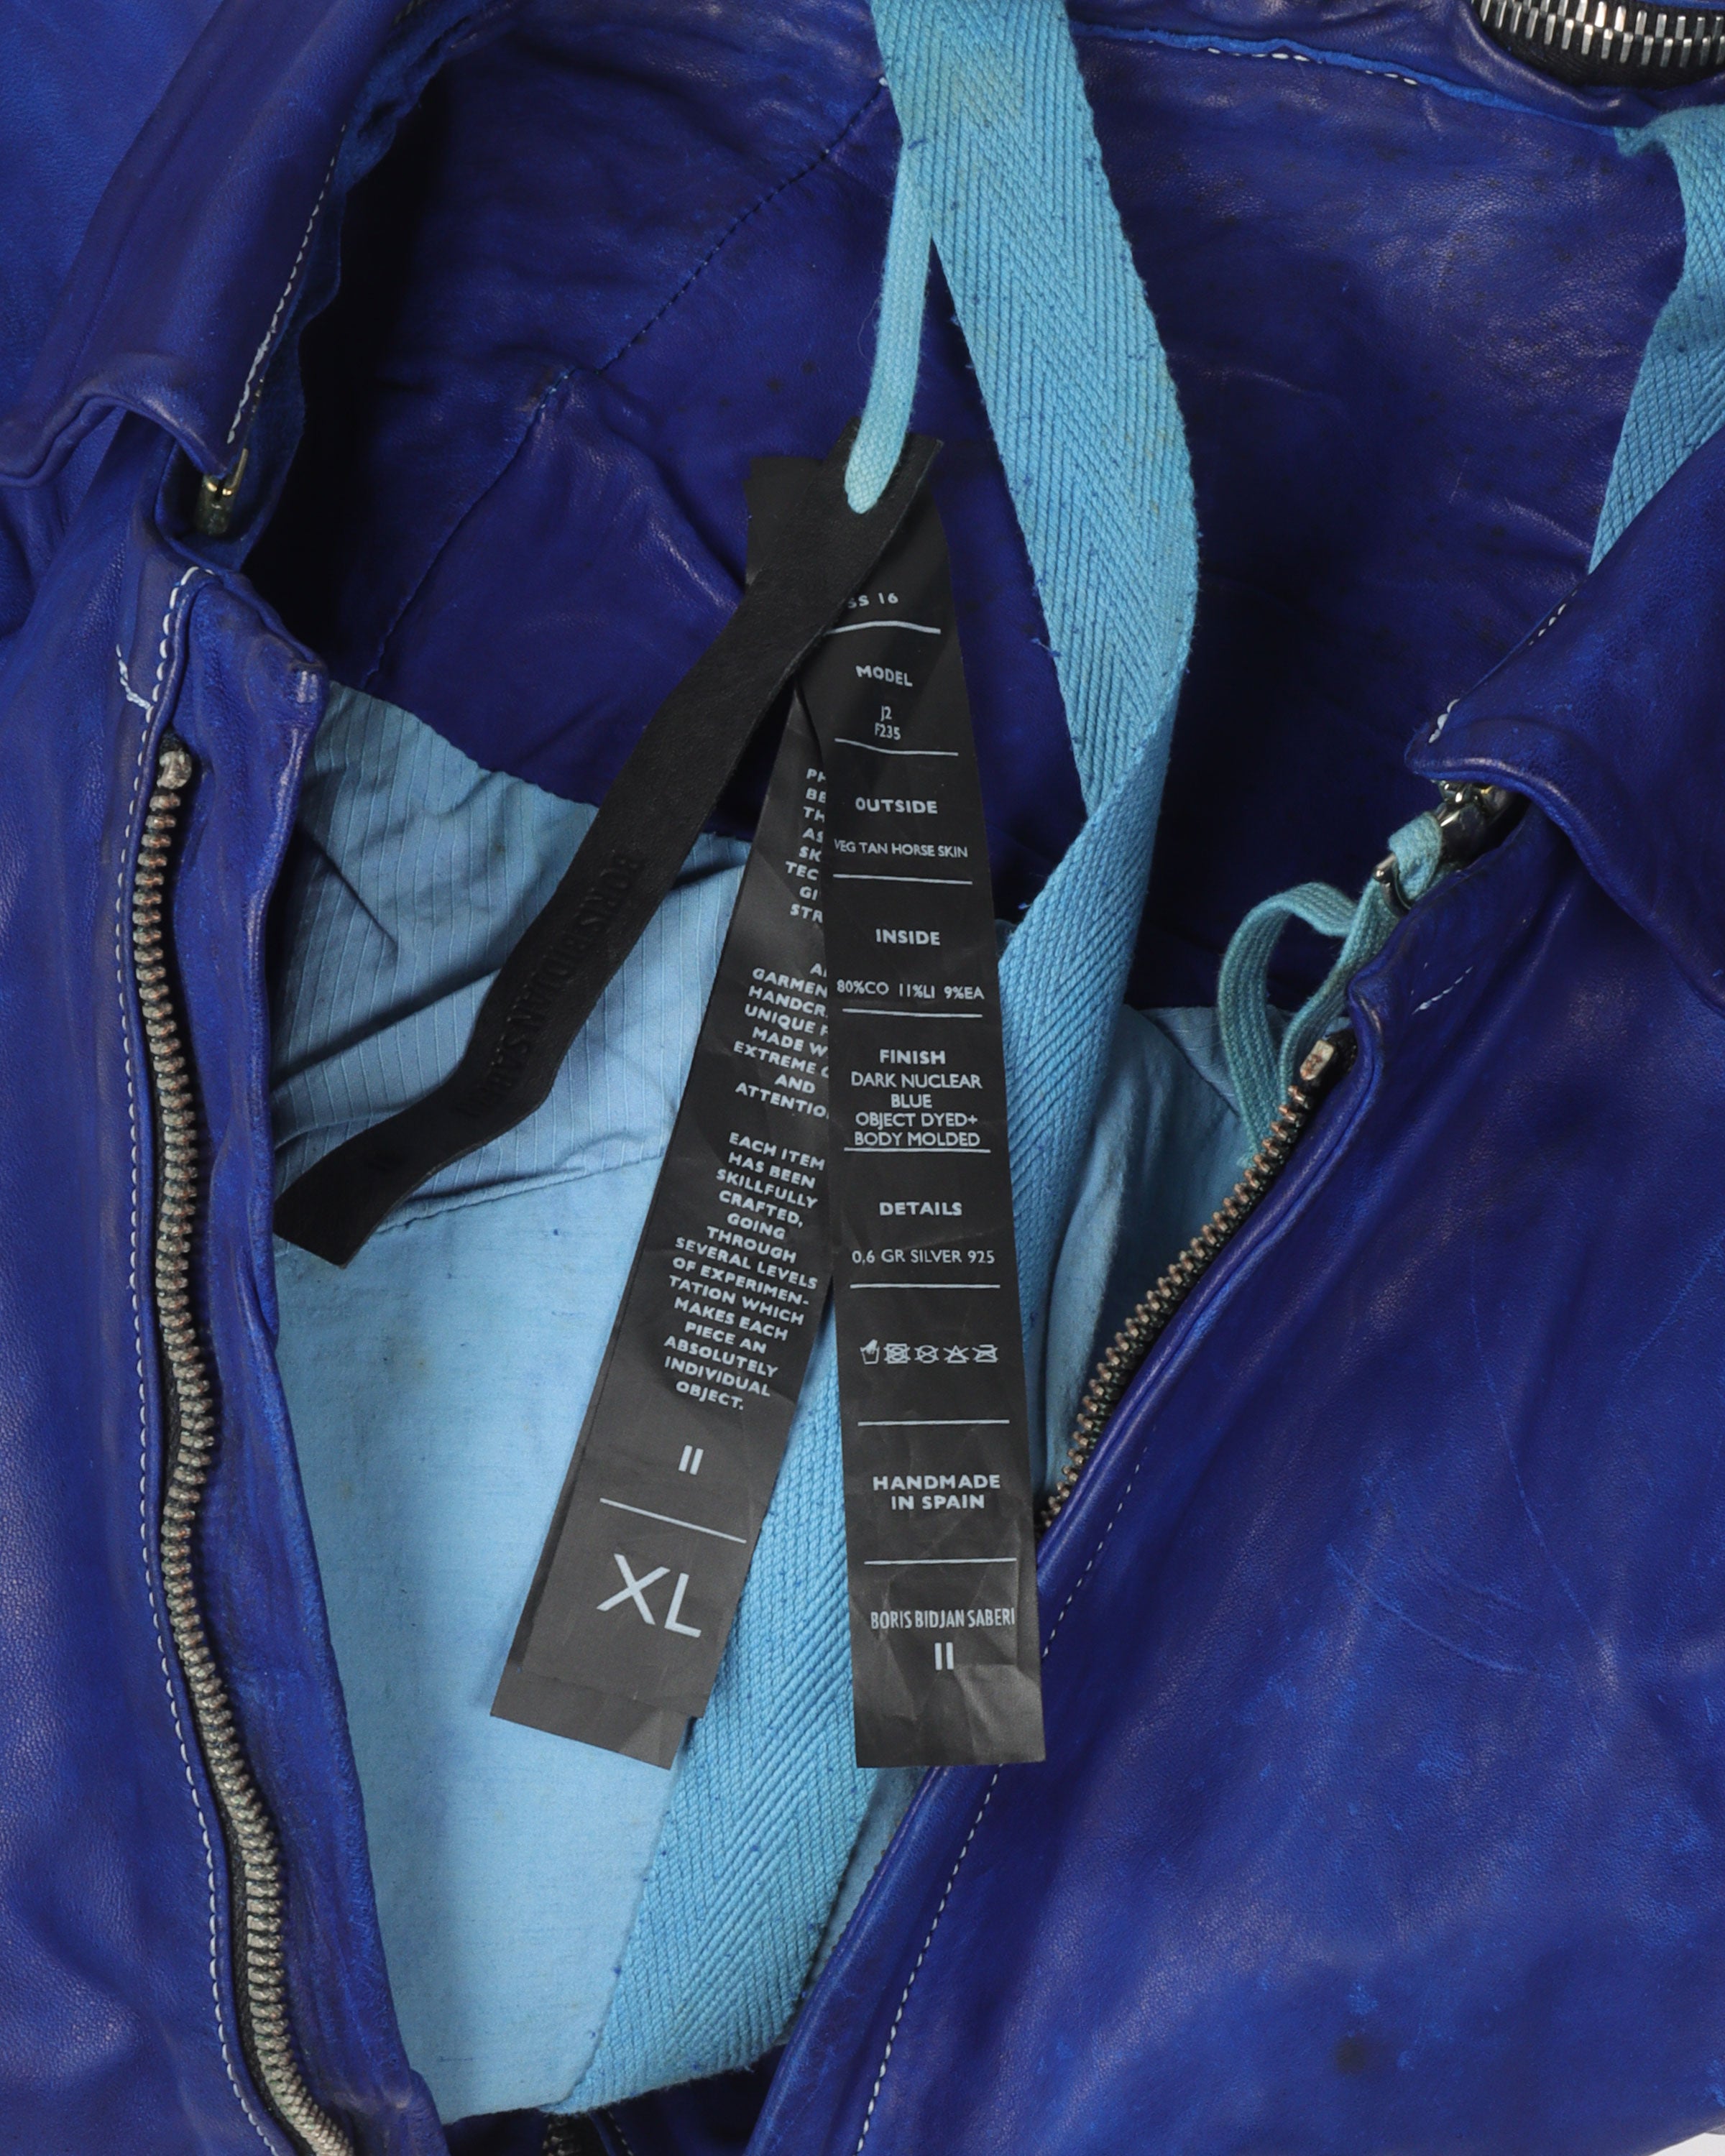 SS16 Horse Leather Jacket w/ Detachable Hood